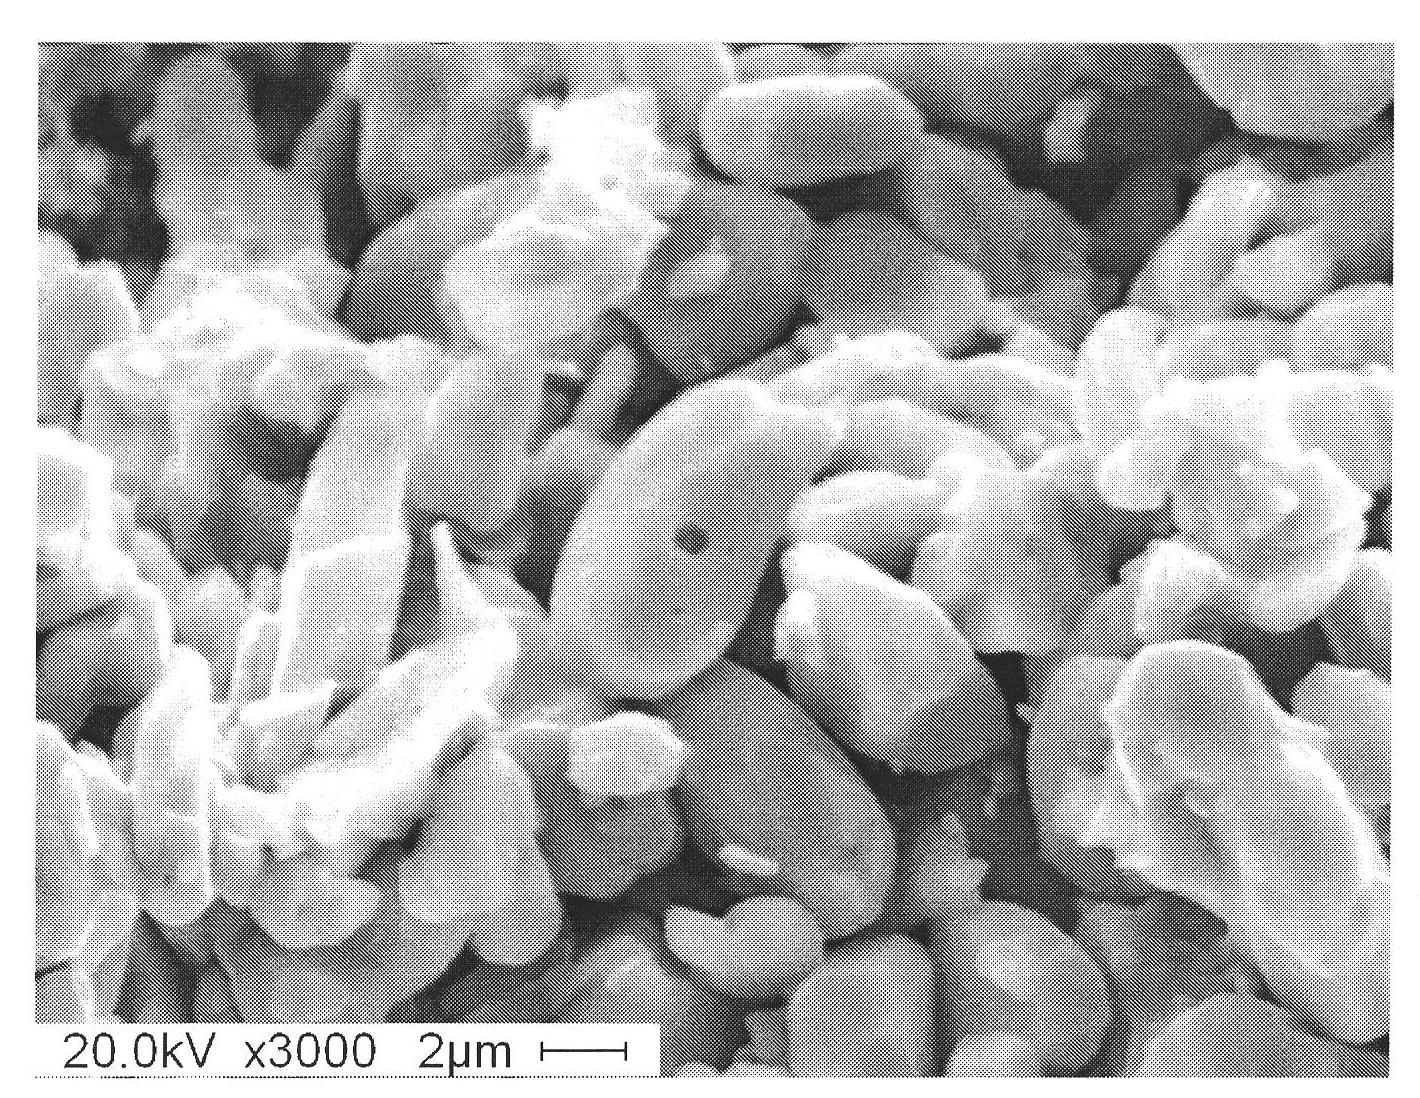 Method for promoting sintering of titanium boride ceramic by using reaction aids